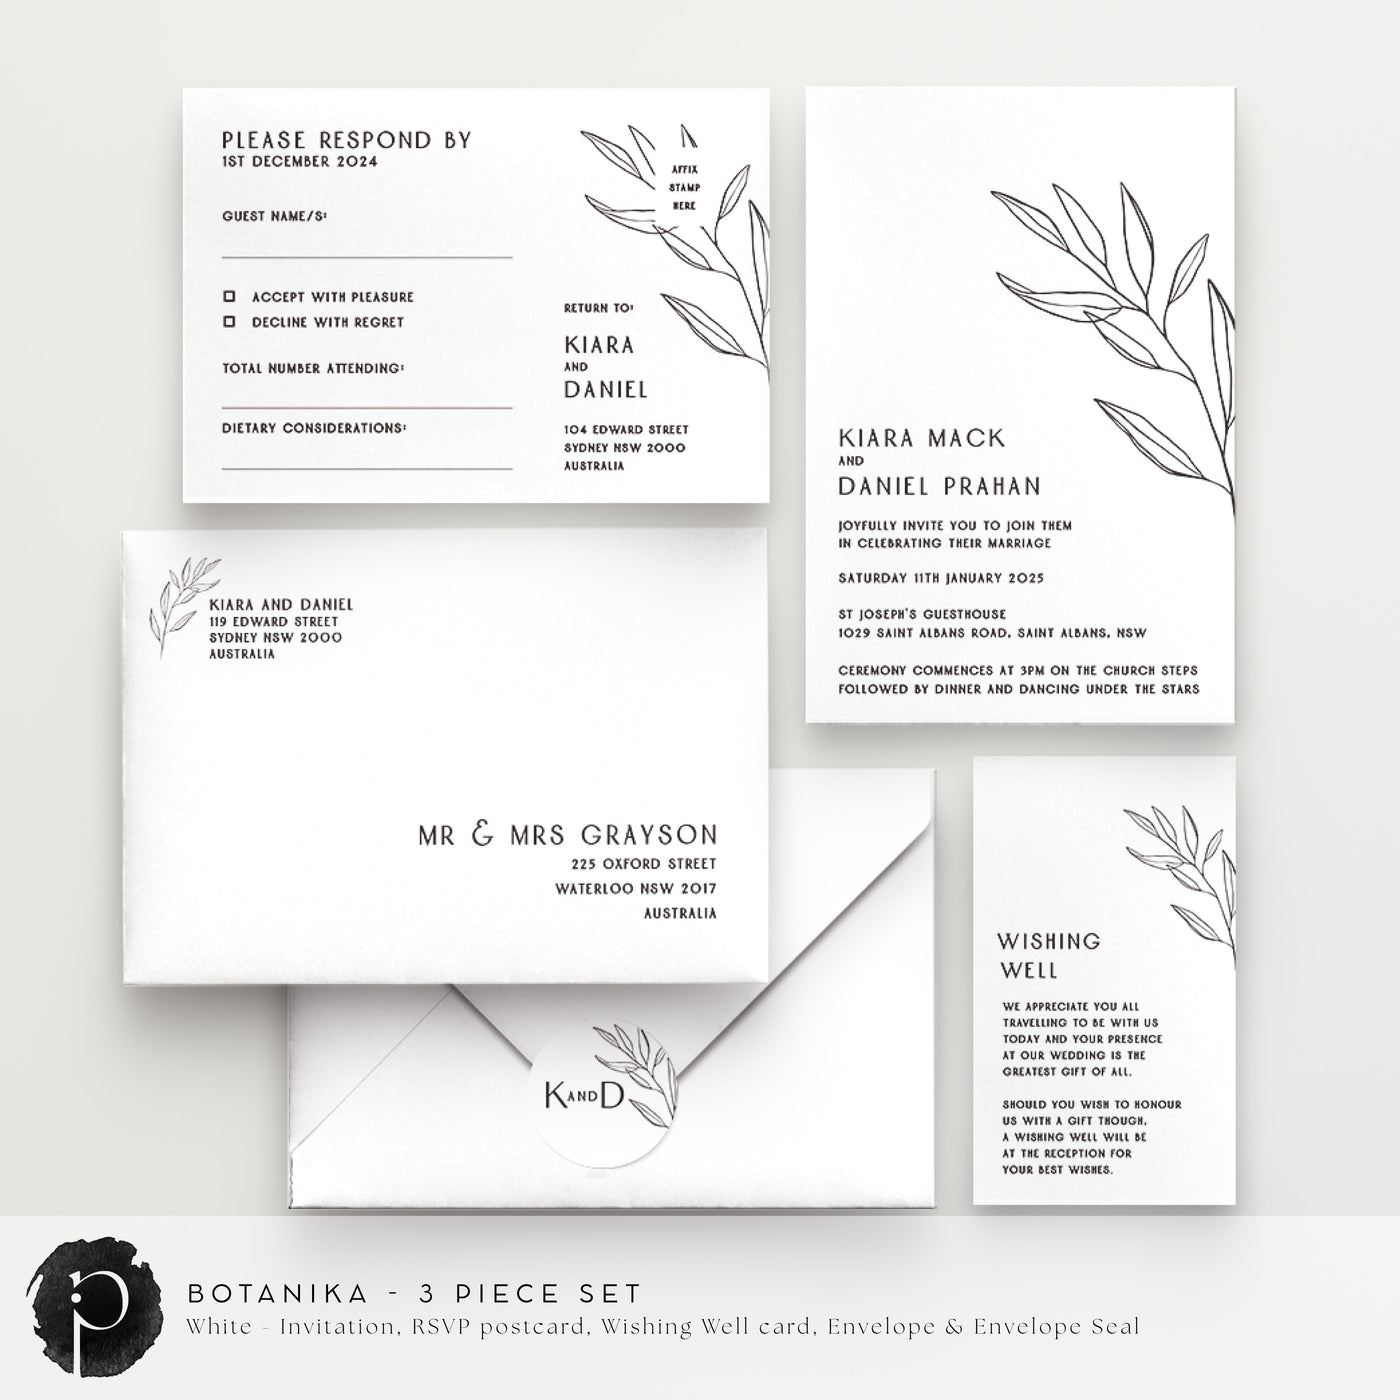 Botanika - Wedding Invitation, RSVP Card & Gift/Wishing Well Card Set